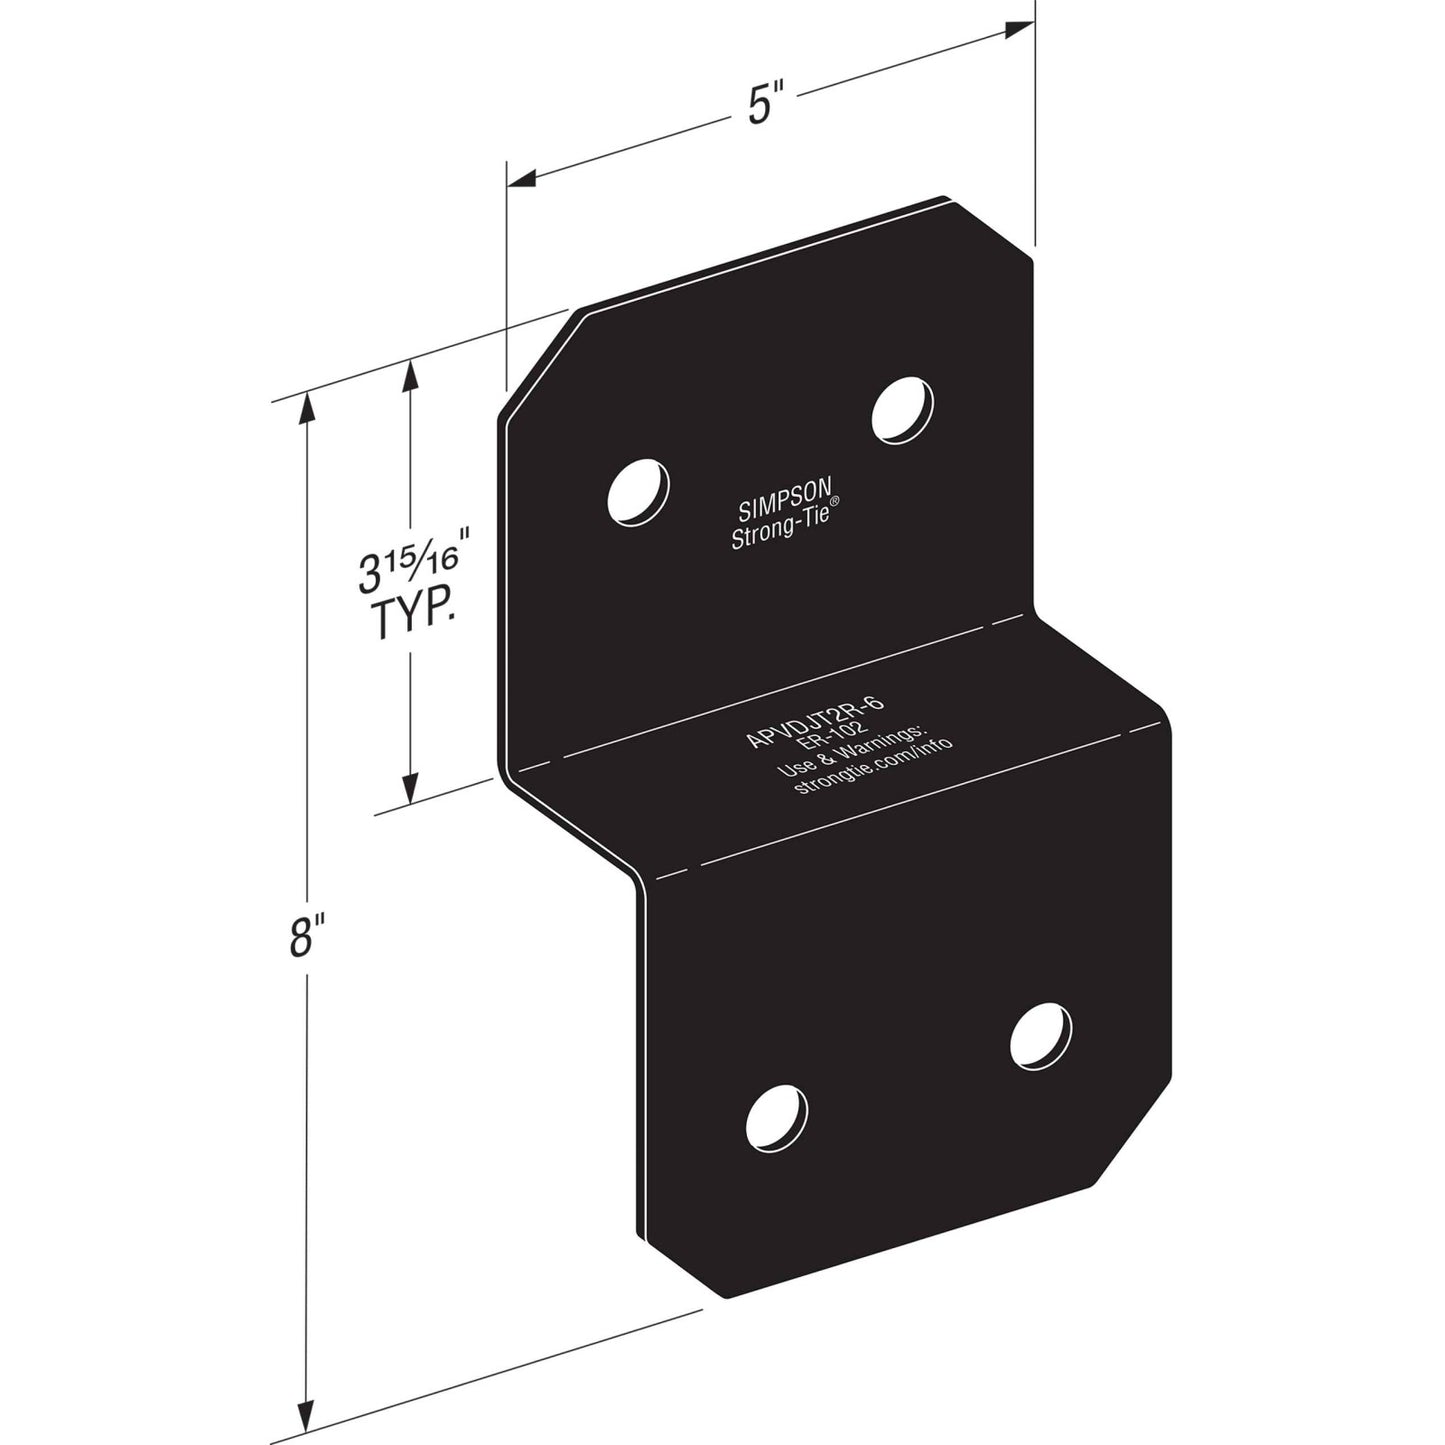 Simpson APVDJT2R6 Avant Ornamental Deck Joist Tie Black Powder Coat image 1 of 4 image 2 of 4 image 3 of 4